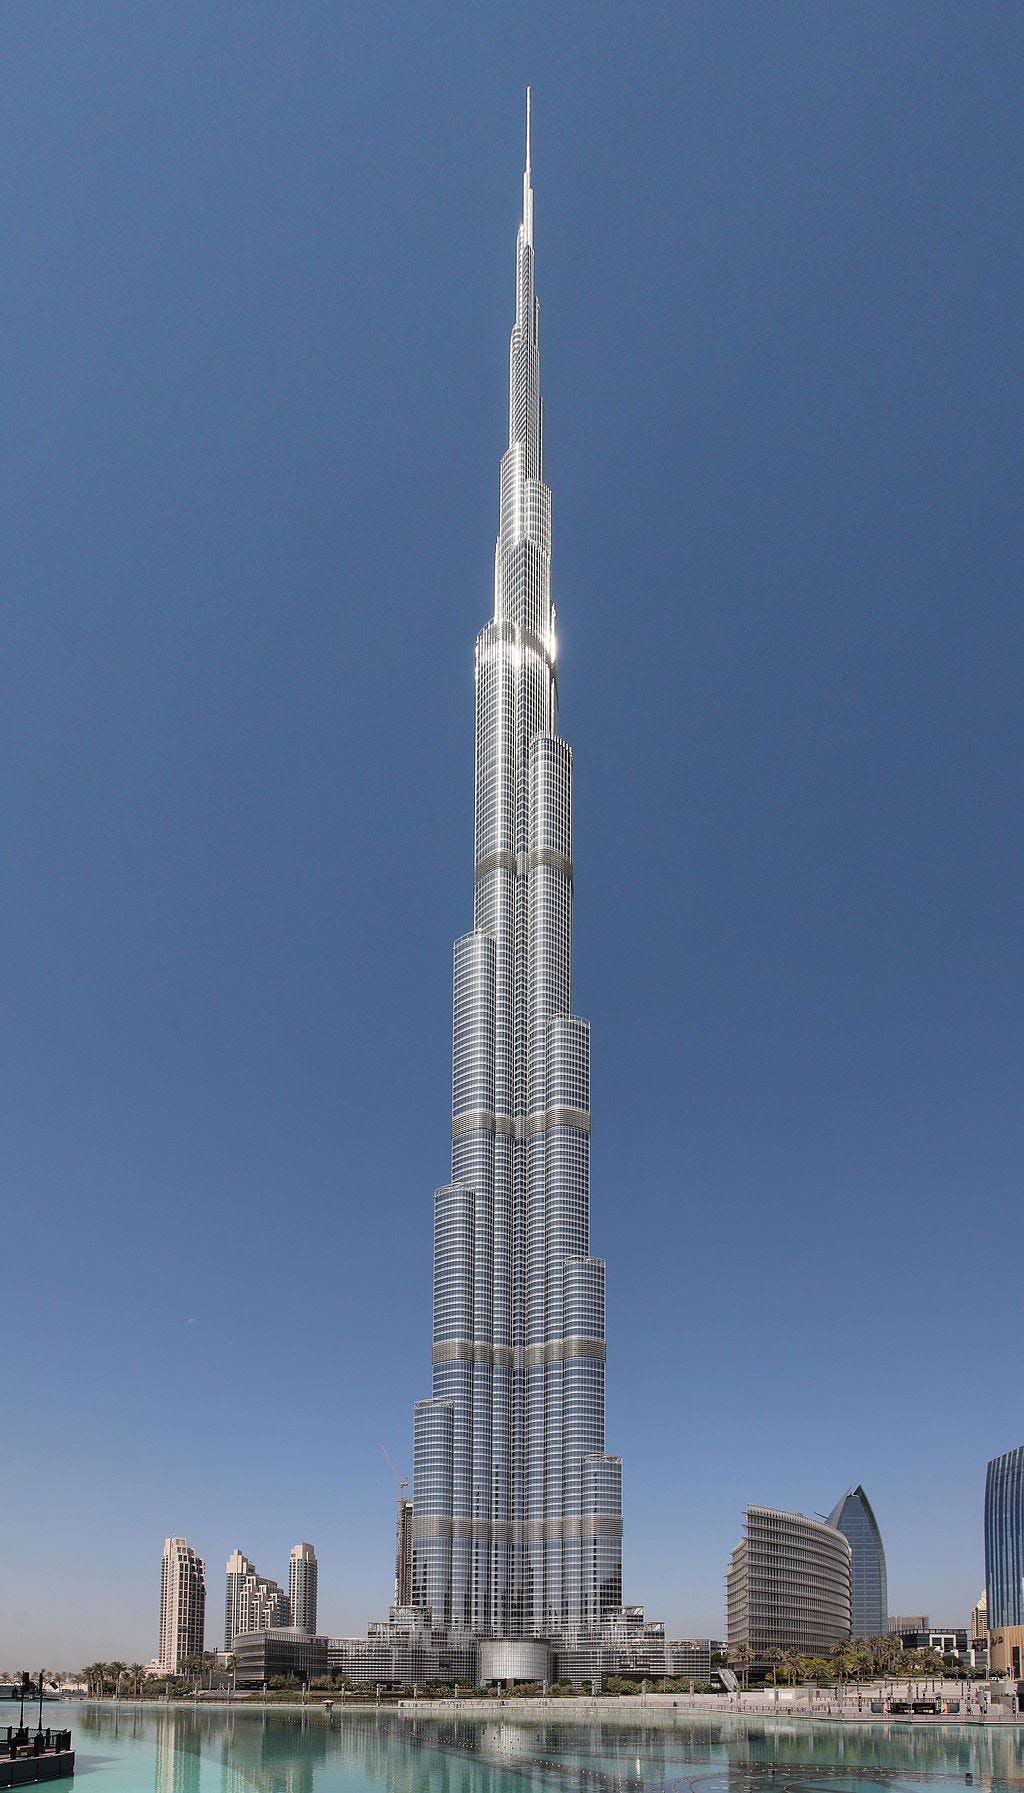 An image of the Burj Khalifa in Dubai.